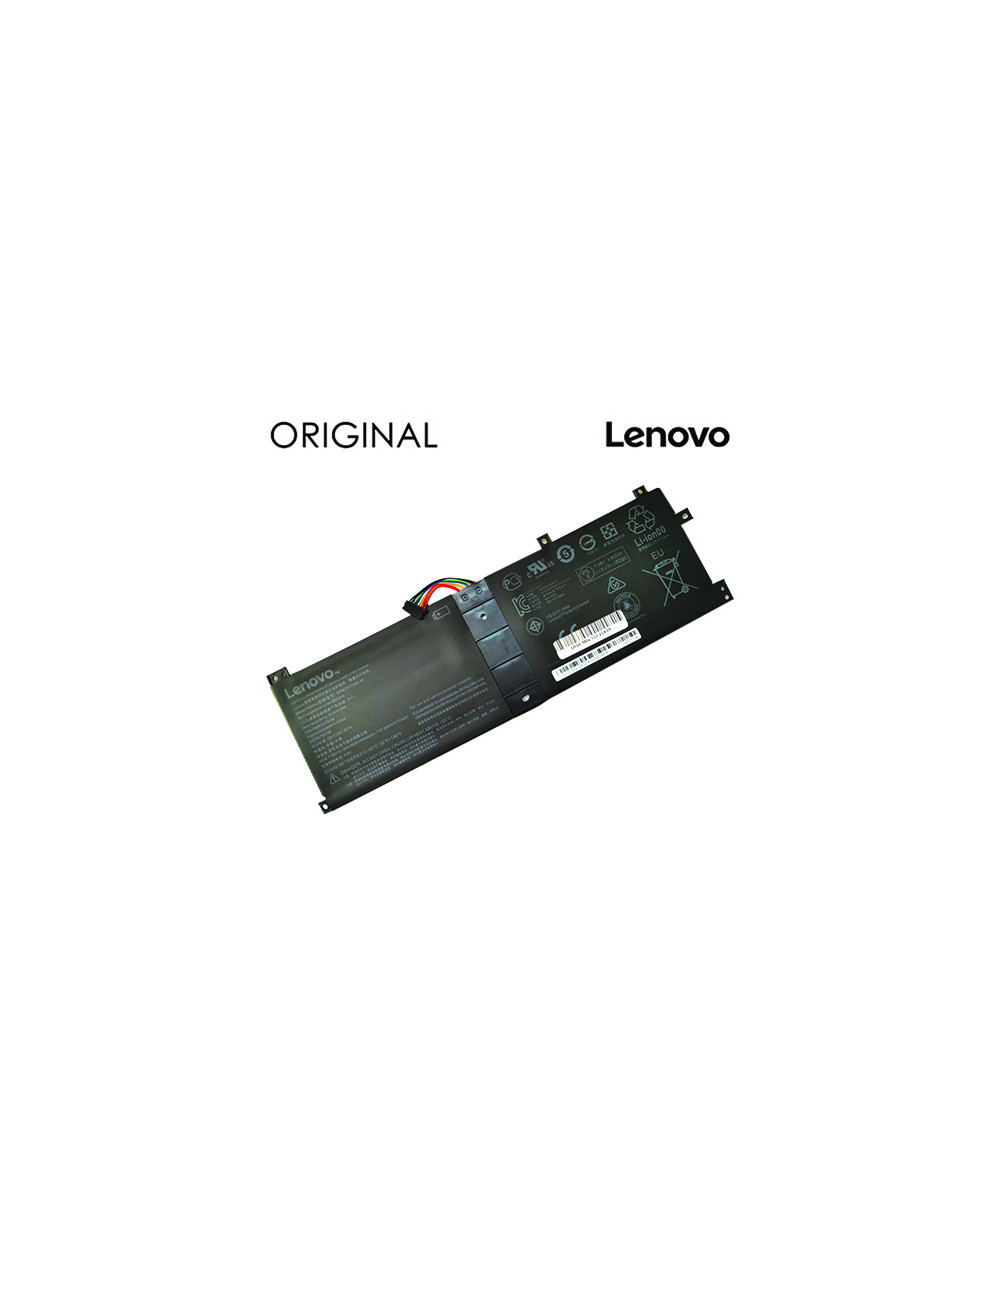 Notebook Battery LENOVO Miix 510, 5110mAh, Original